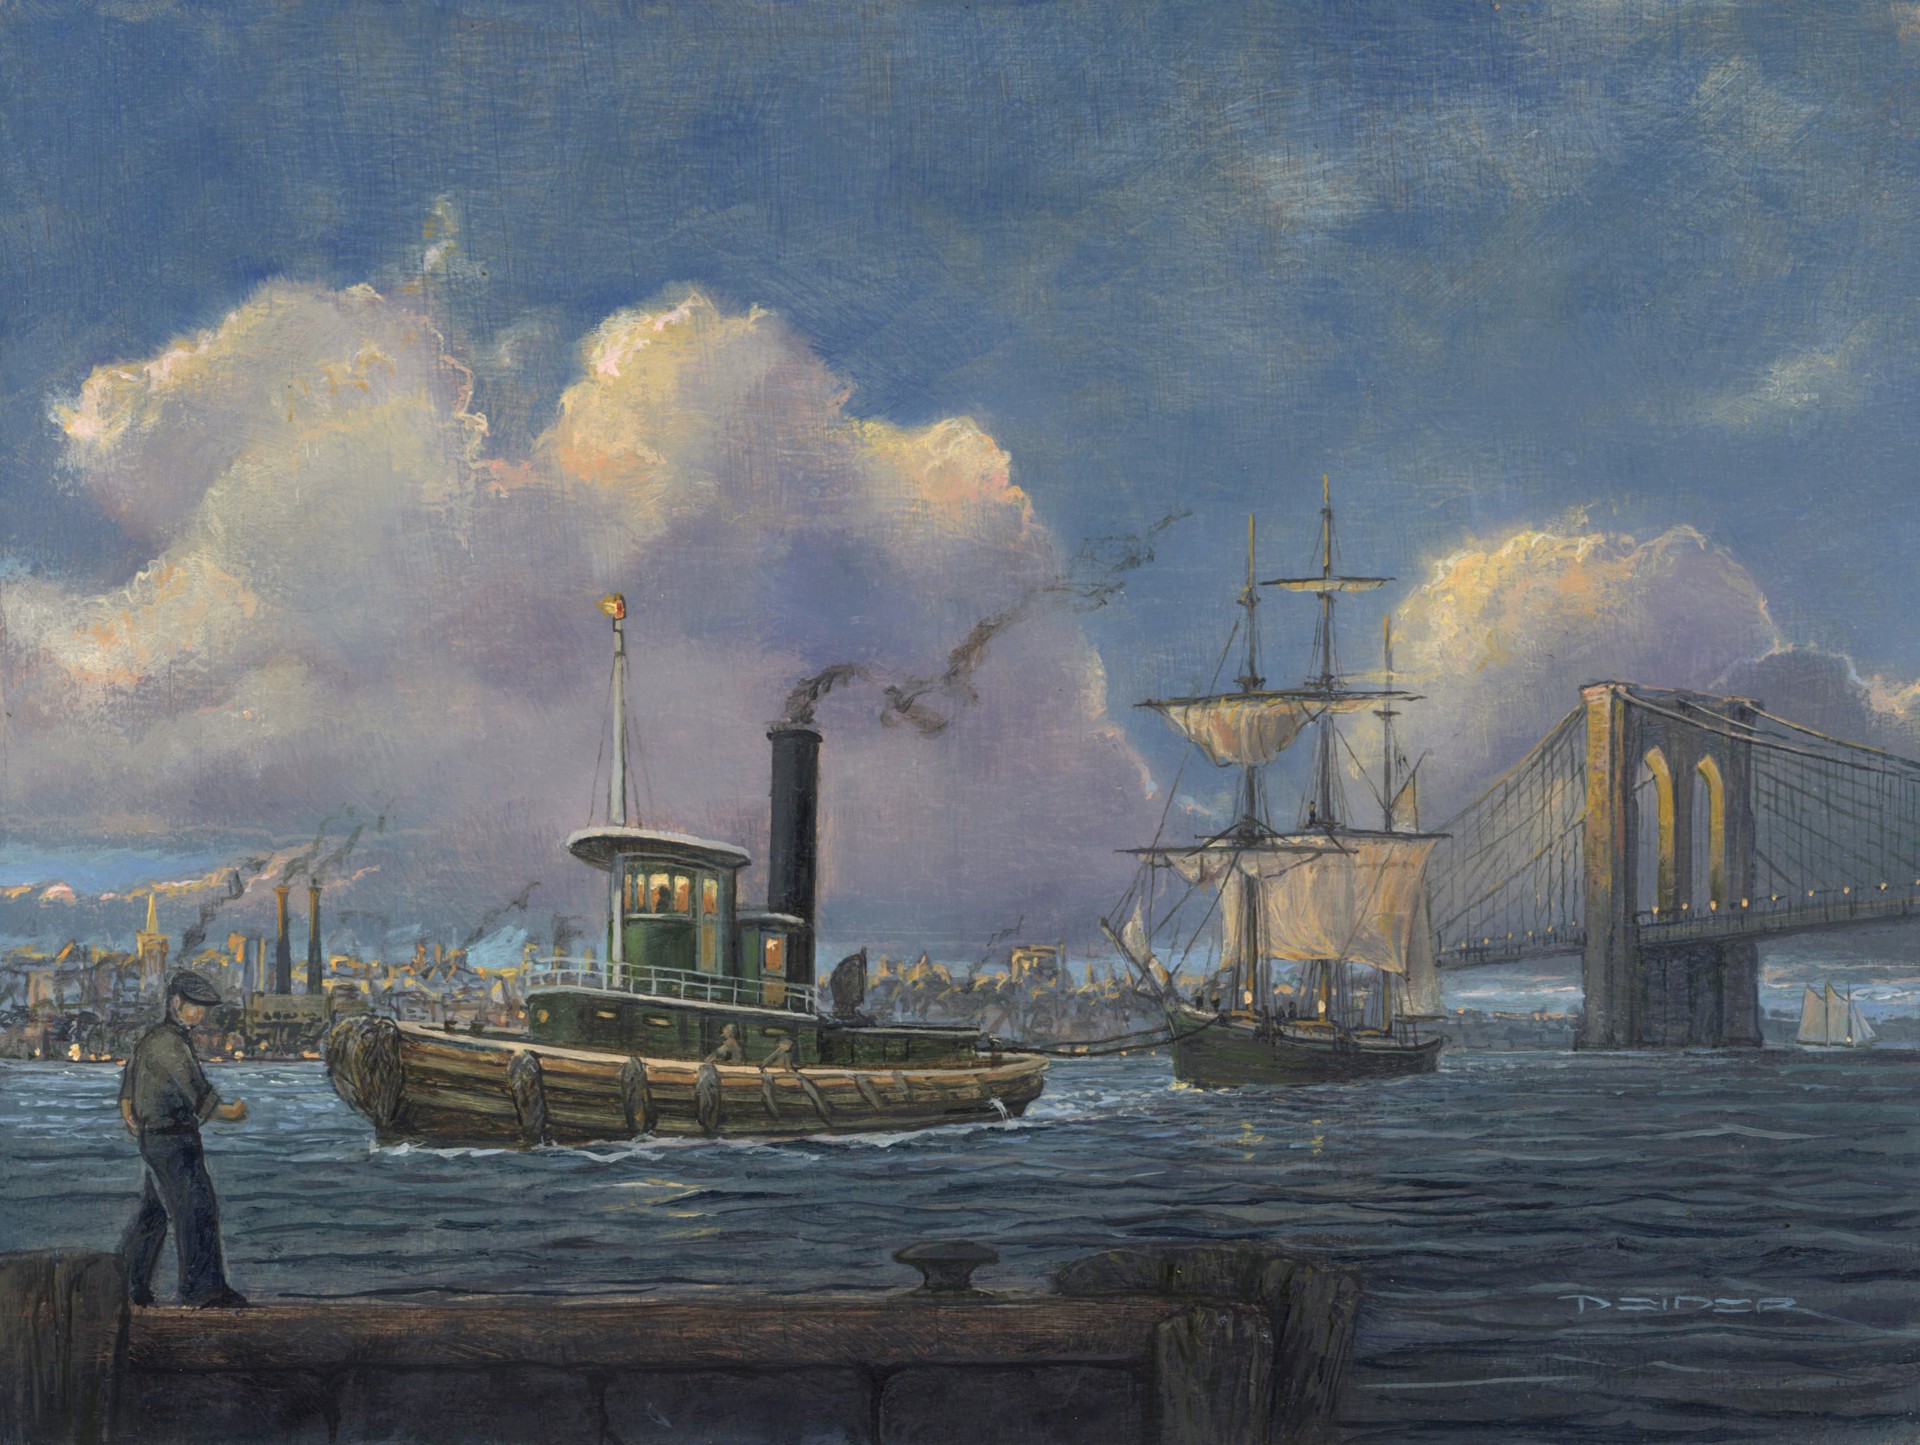 East River Tug by Doug Zider